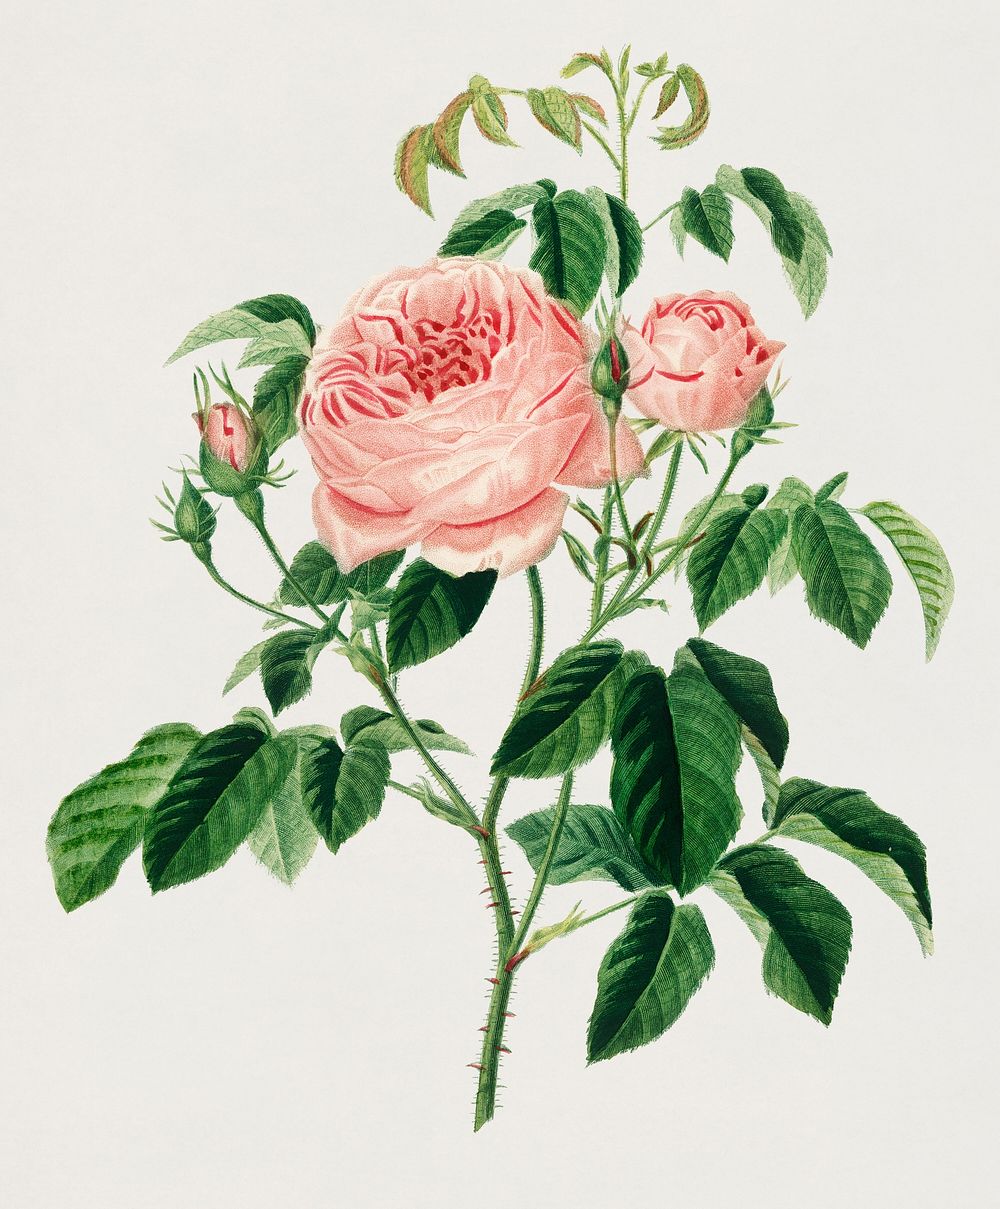 Vintage Illustration of Cabbage Rose (Rosa Centifilia)